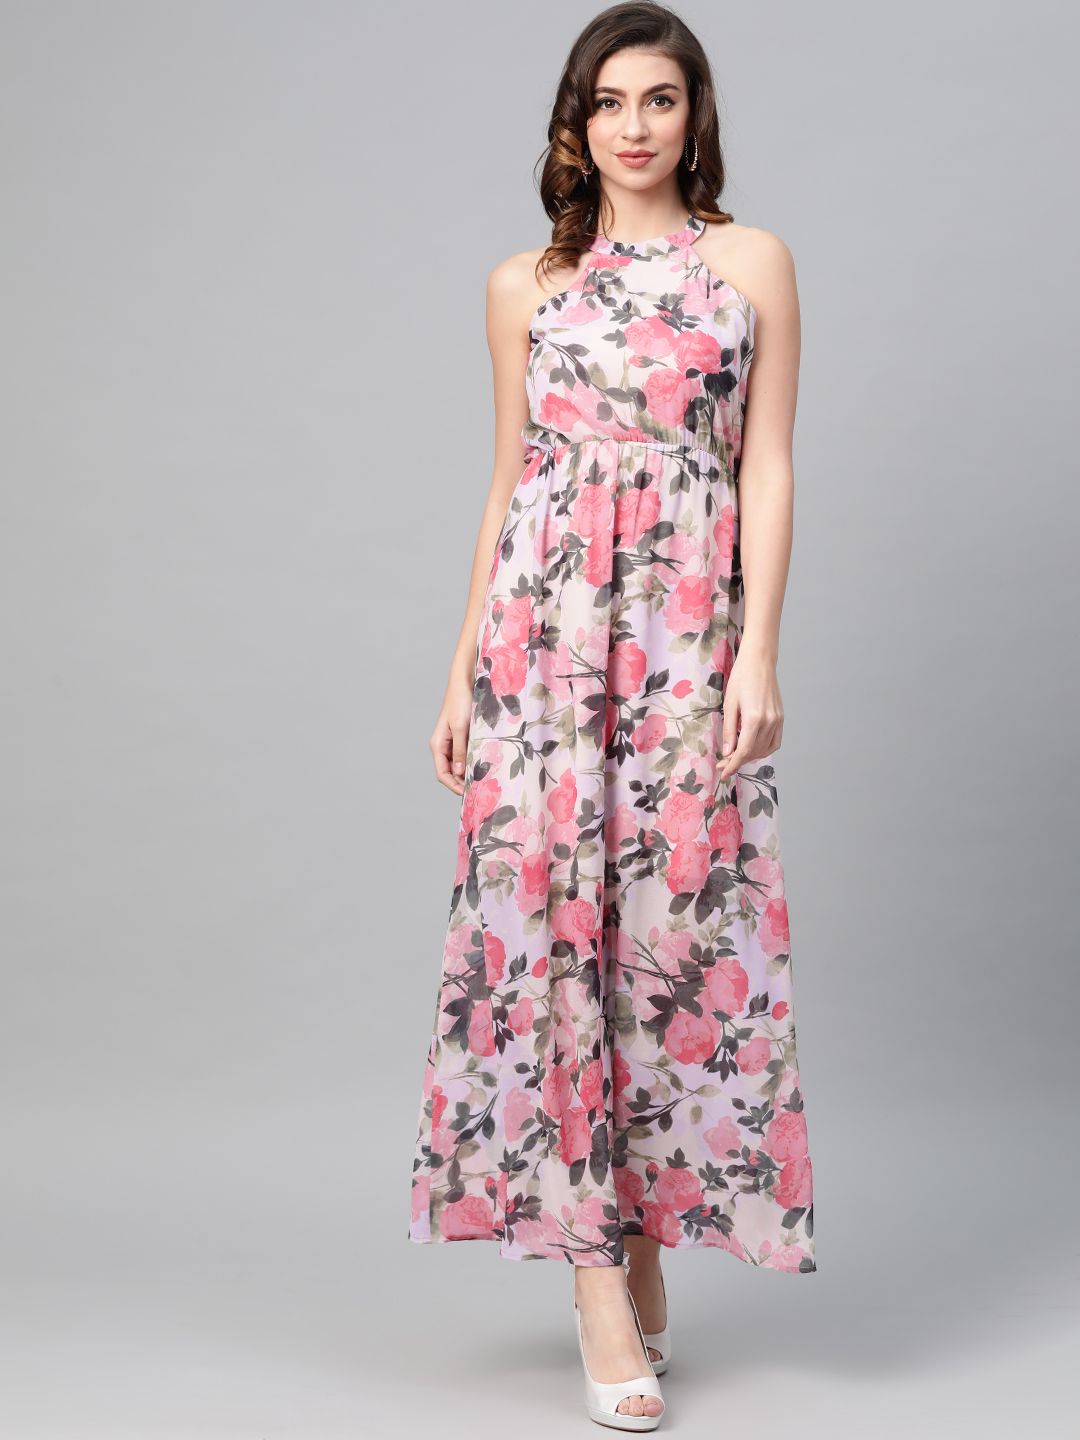 SASSAFRAS Cream-Coloured & Pink Floral Printed Maxi Dress Price in India